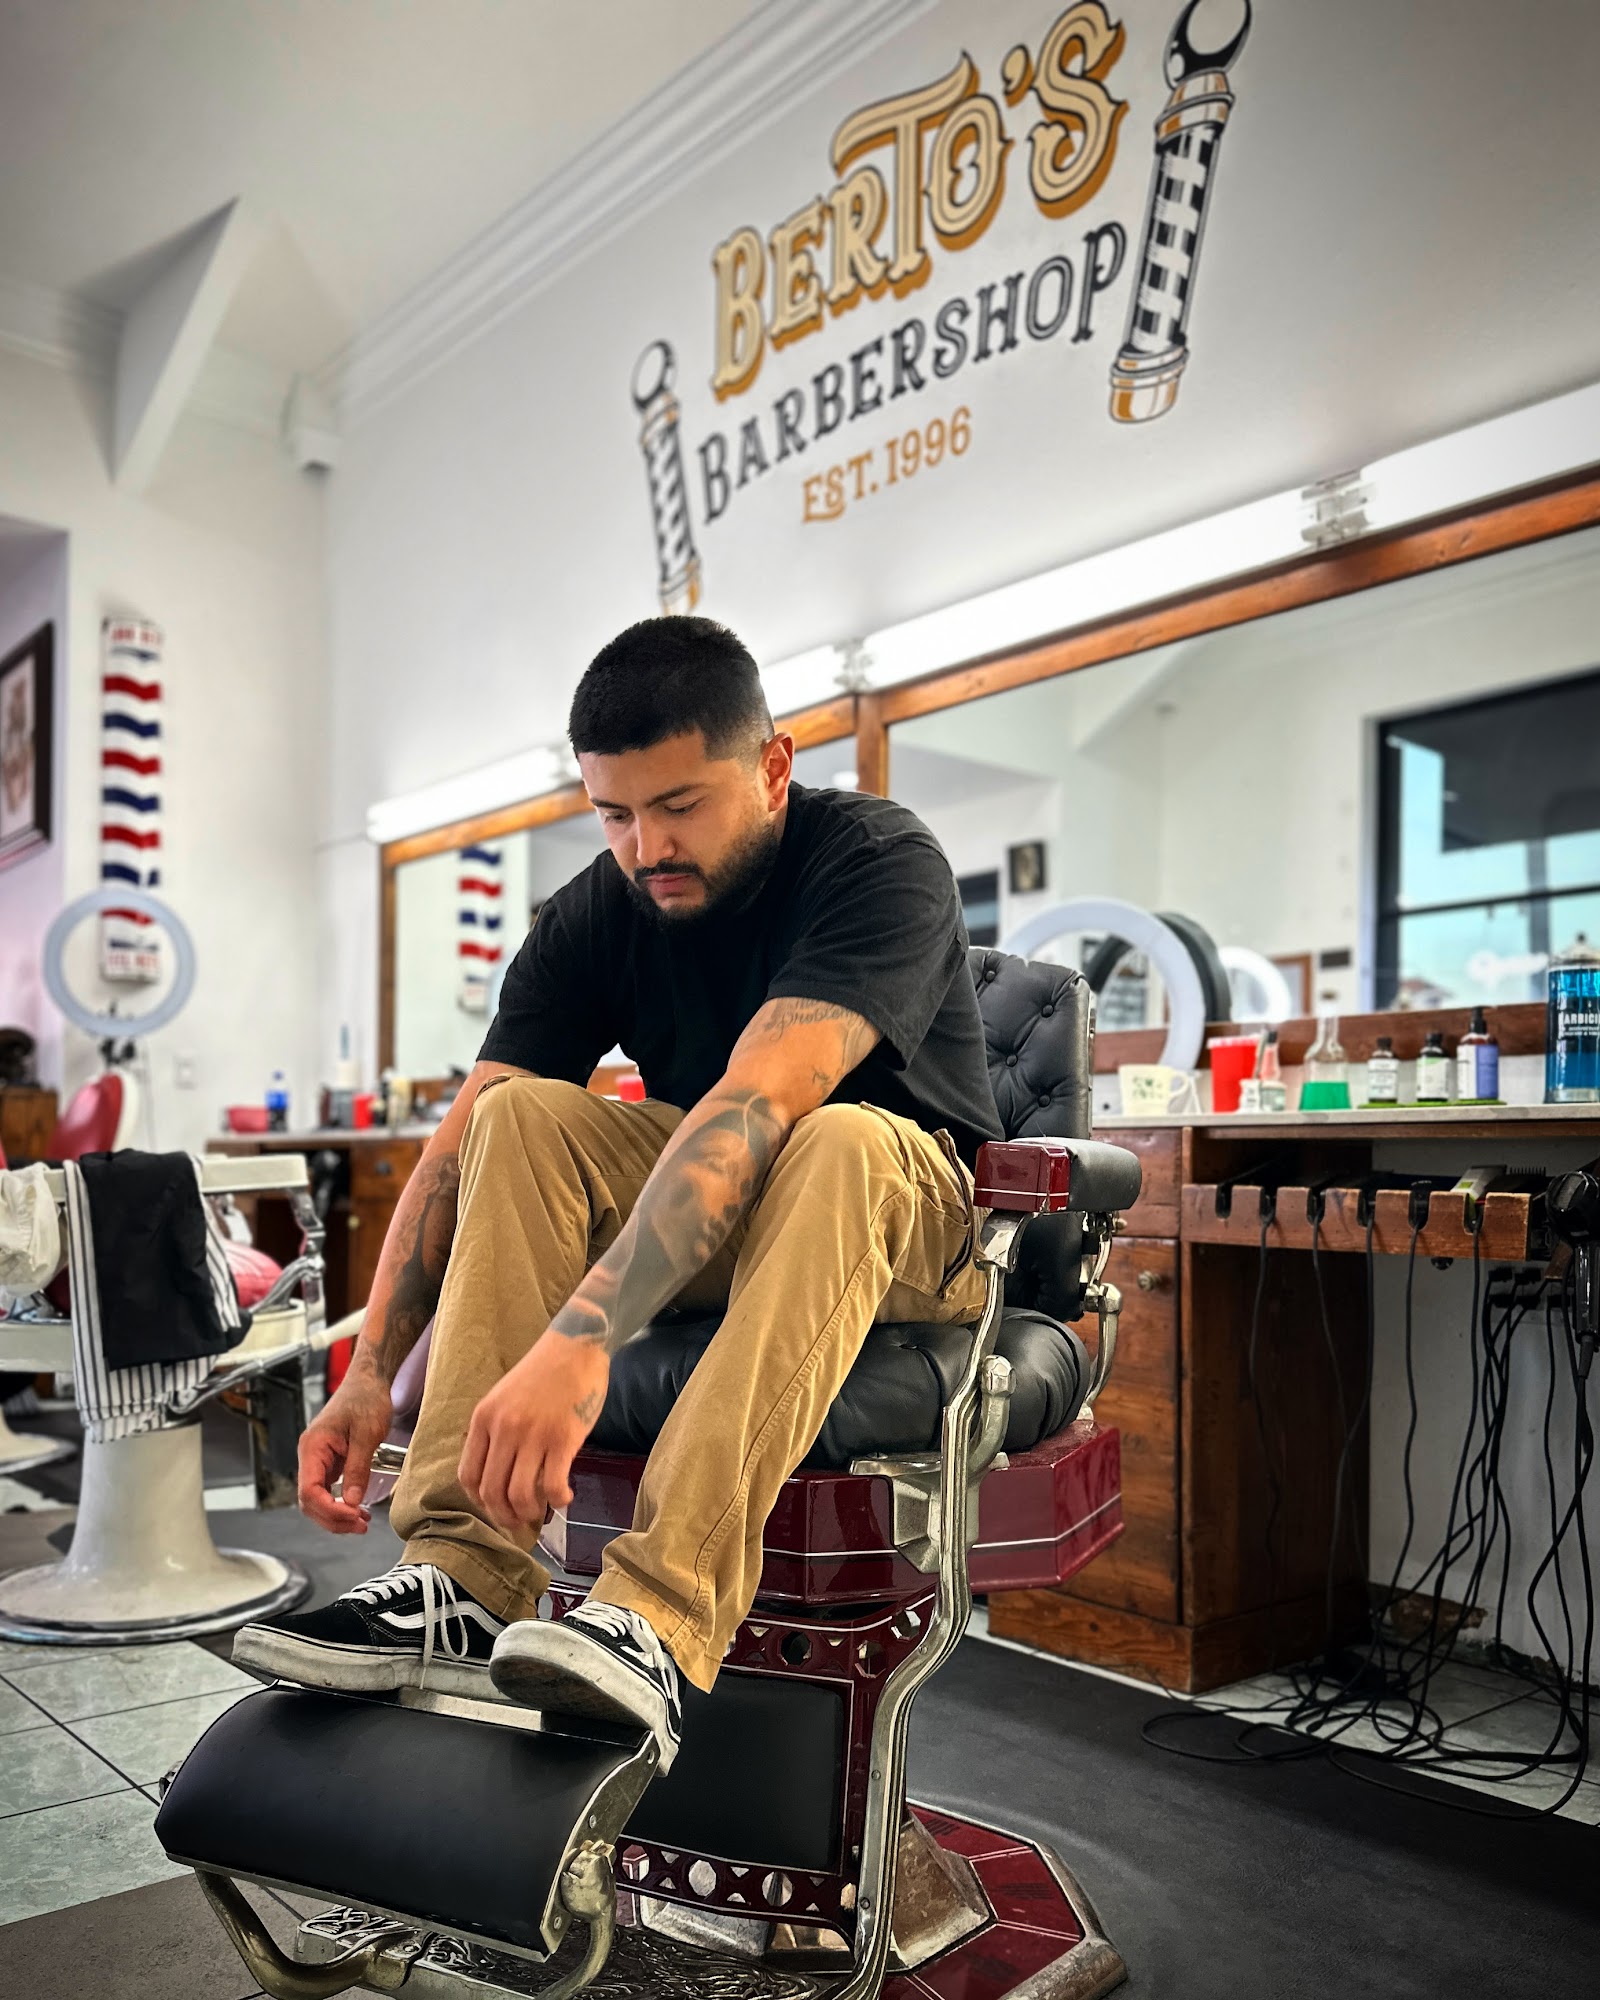 Berto's Barbershop: Los Angeles